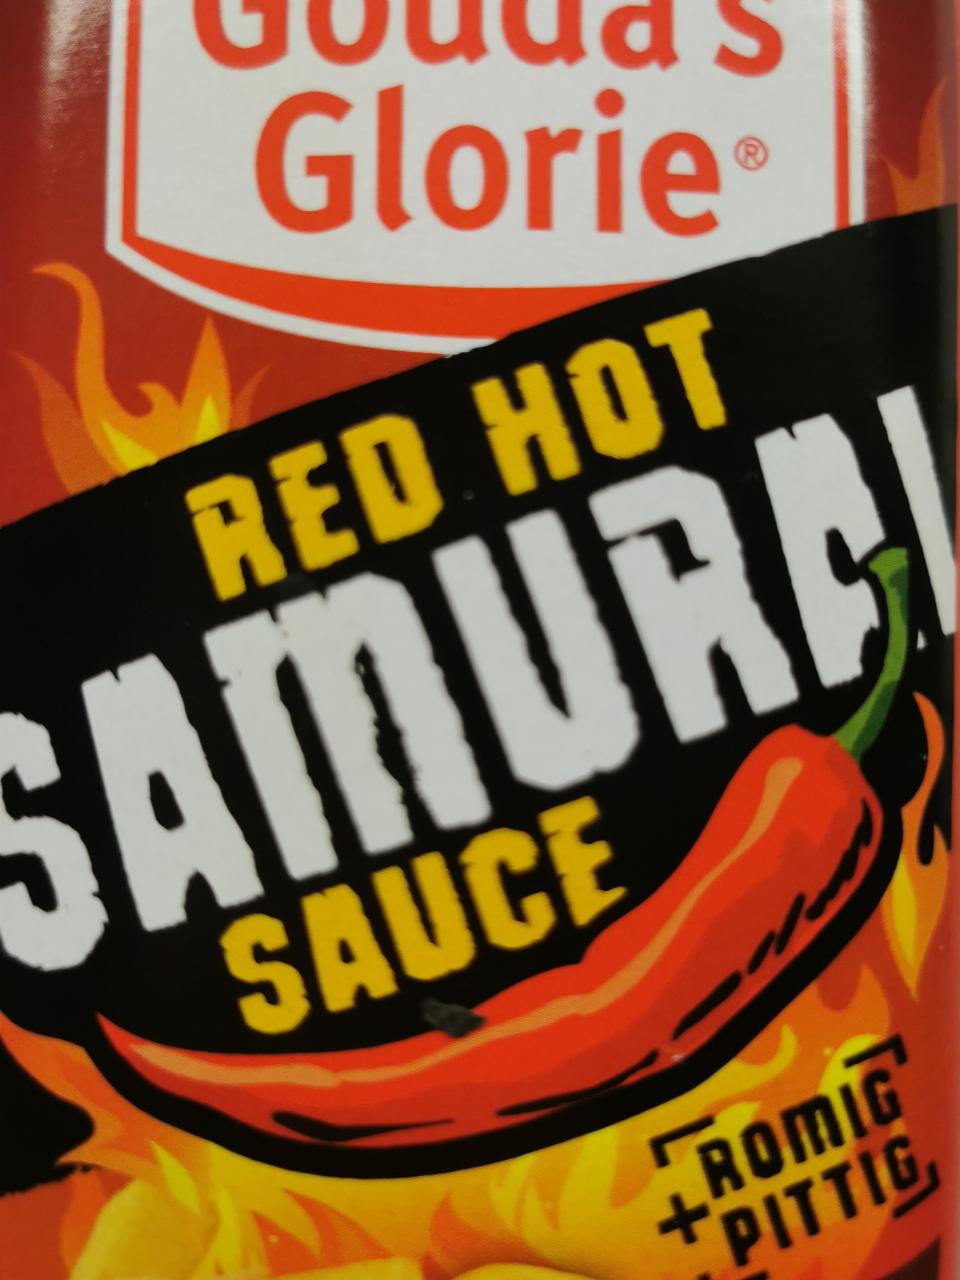 Fotografie - Red Hot Samurai Sauce